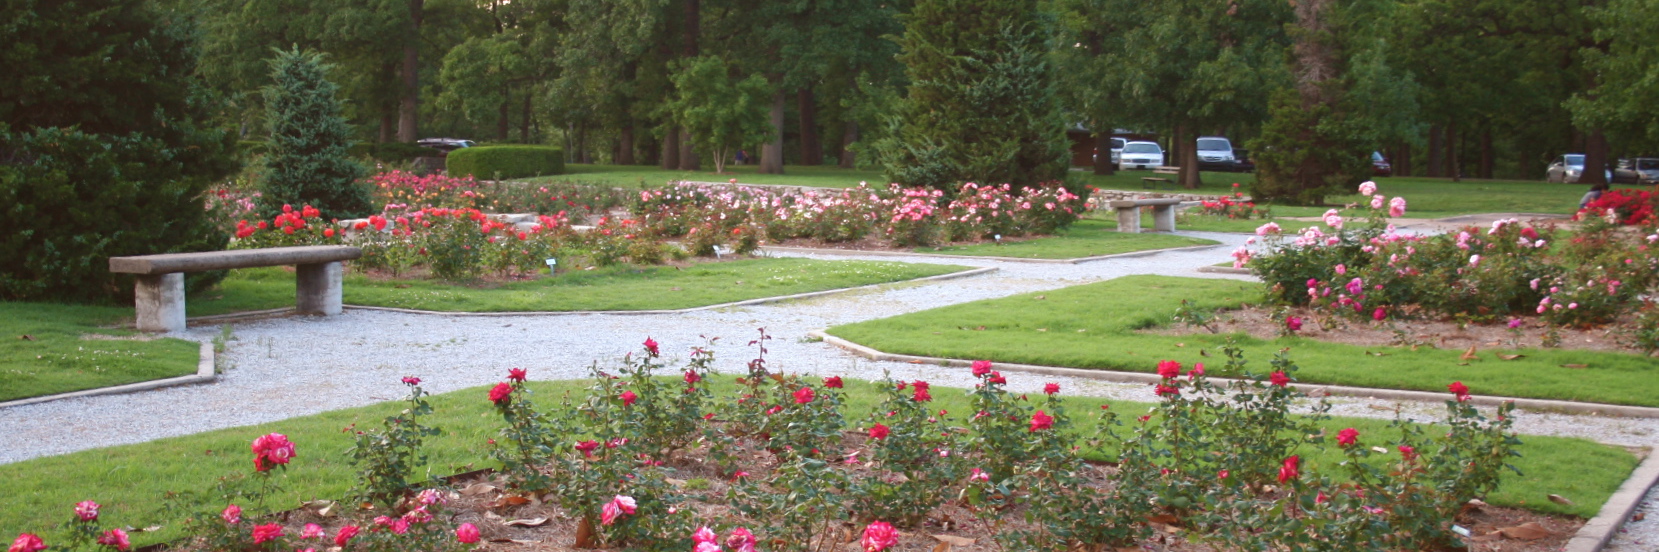 Tulsa Municipal Rose Garden at the Tulsa Garden Center at Woodward Park